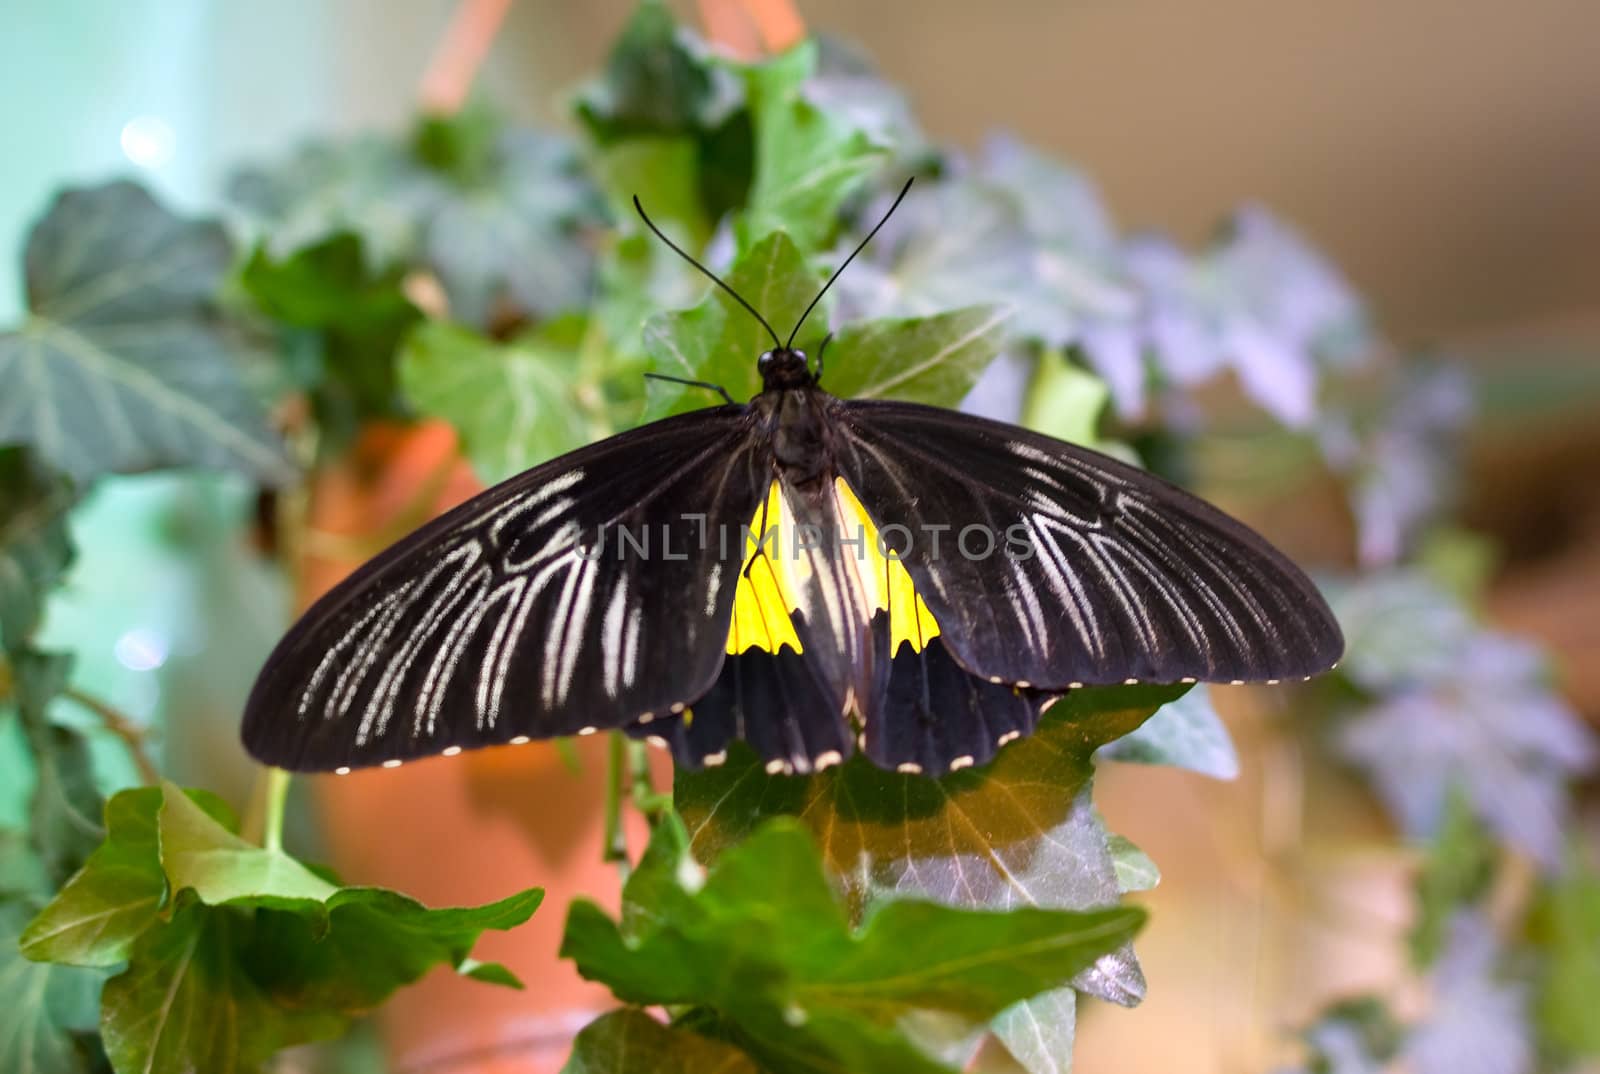 Black Butterfly on green leaf